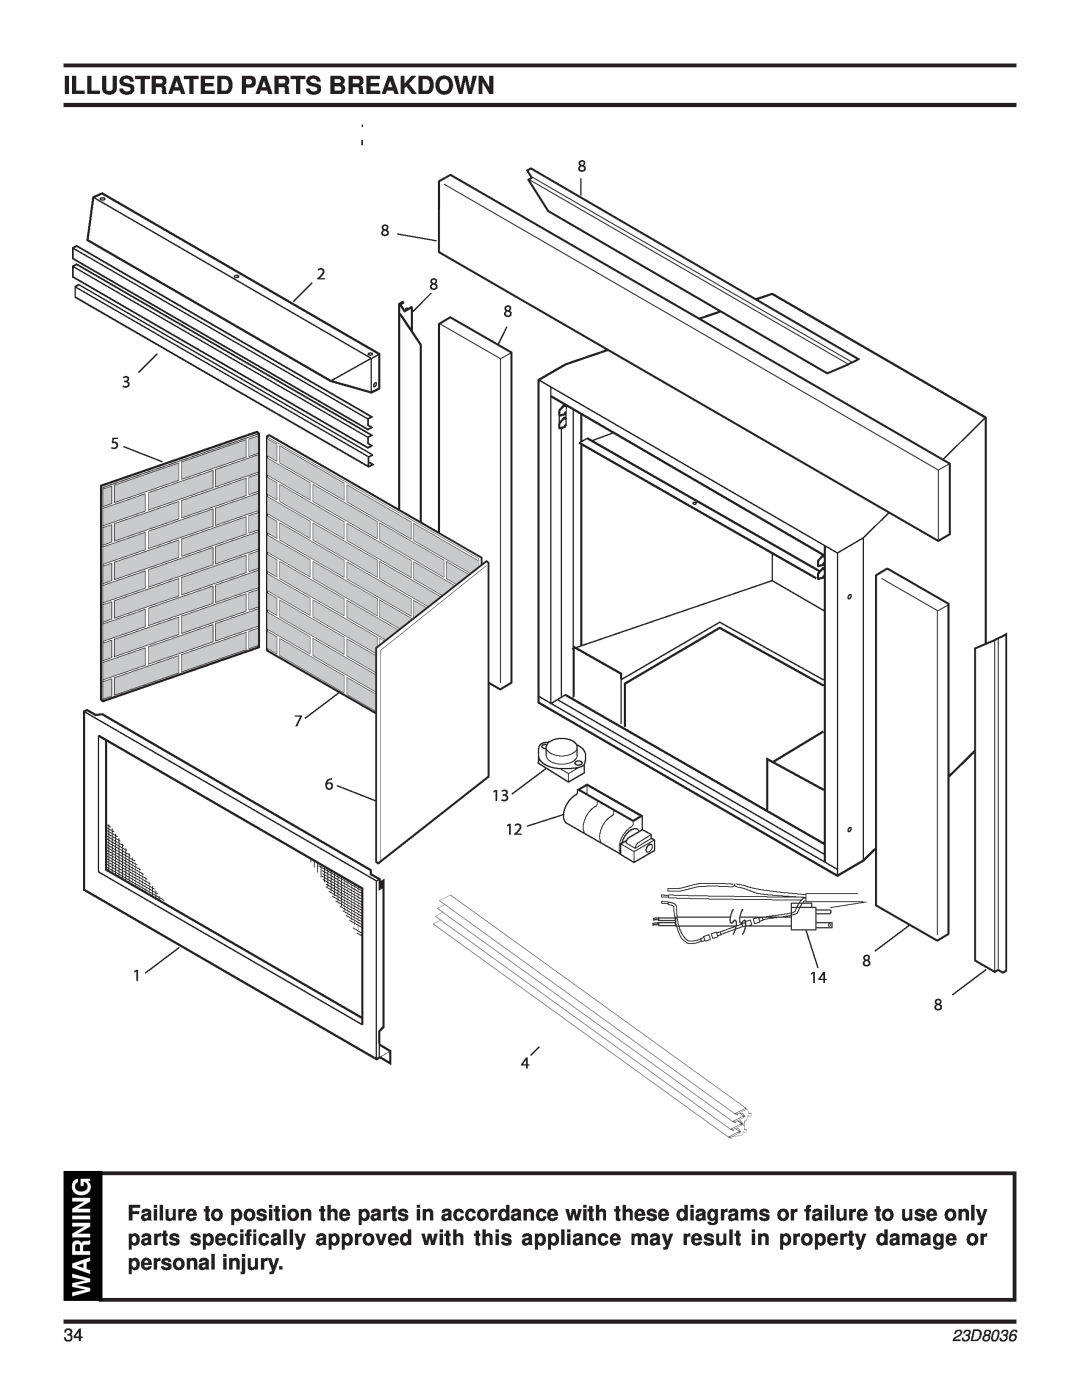 MartinLogan 33ISDG operating instructions Illustrated Parts Breakdown, 23D8036 